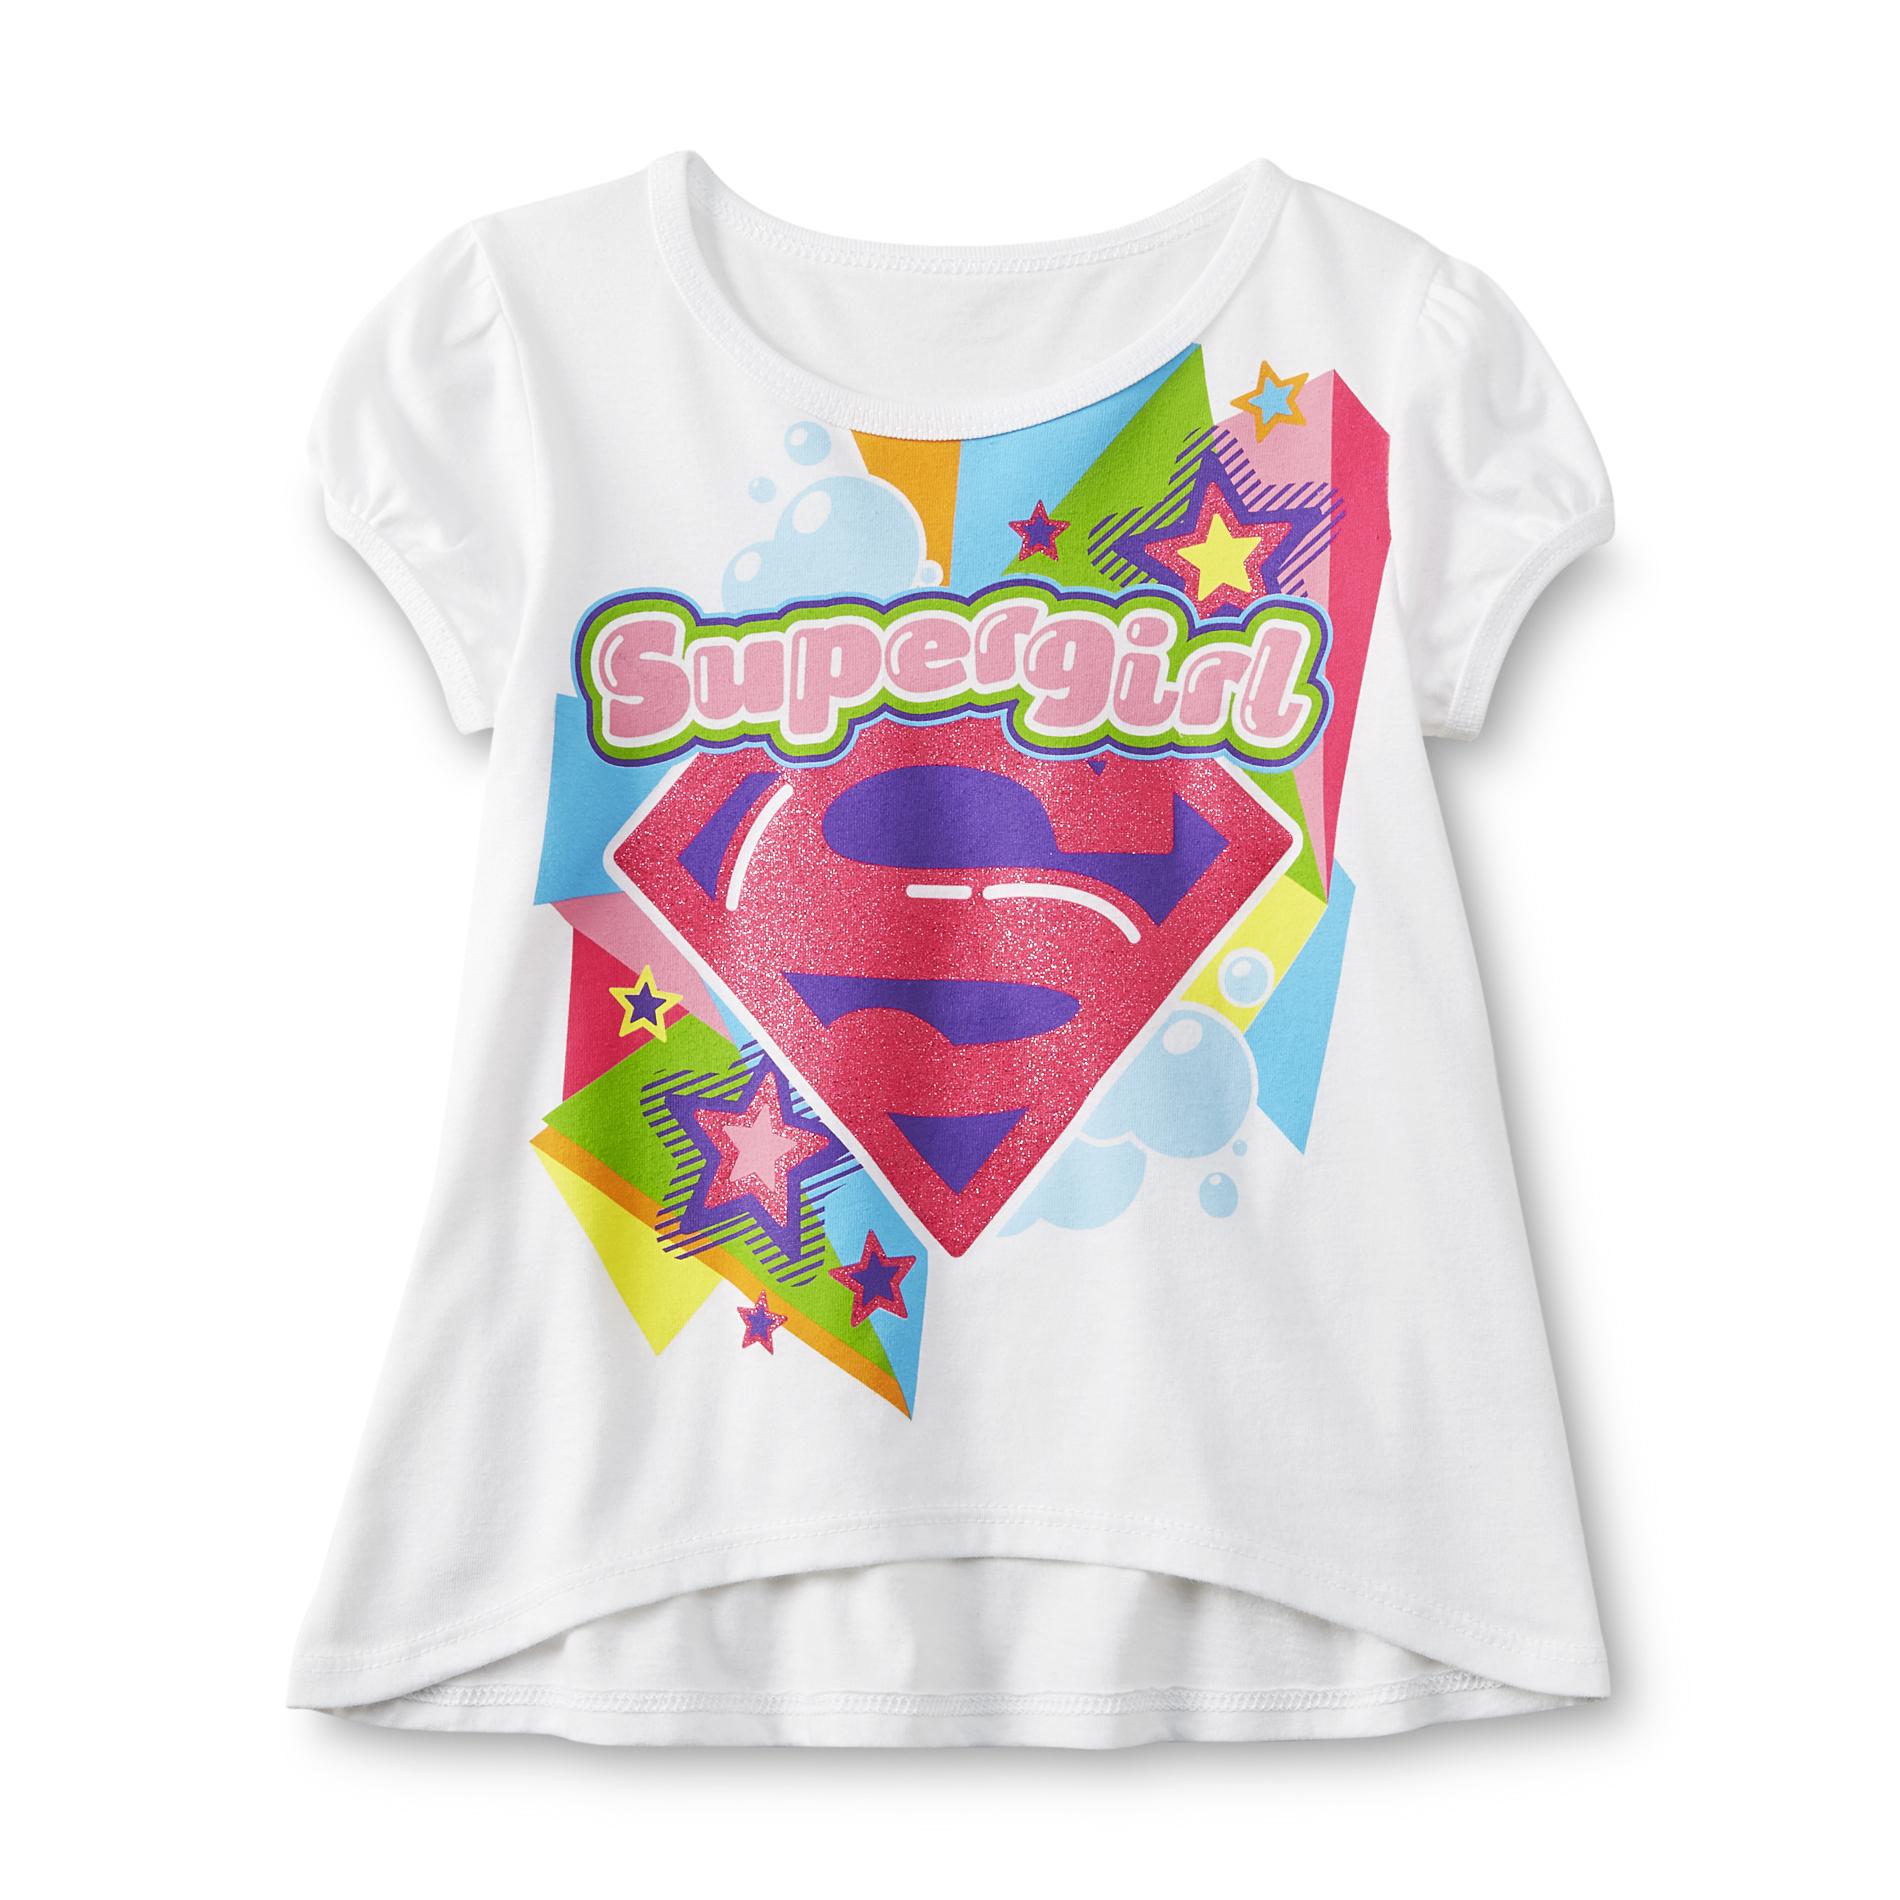 DC Comics Toddler Girl's Graphic T-Shirt - Supergirl